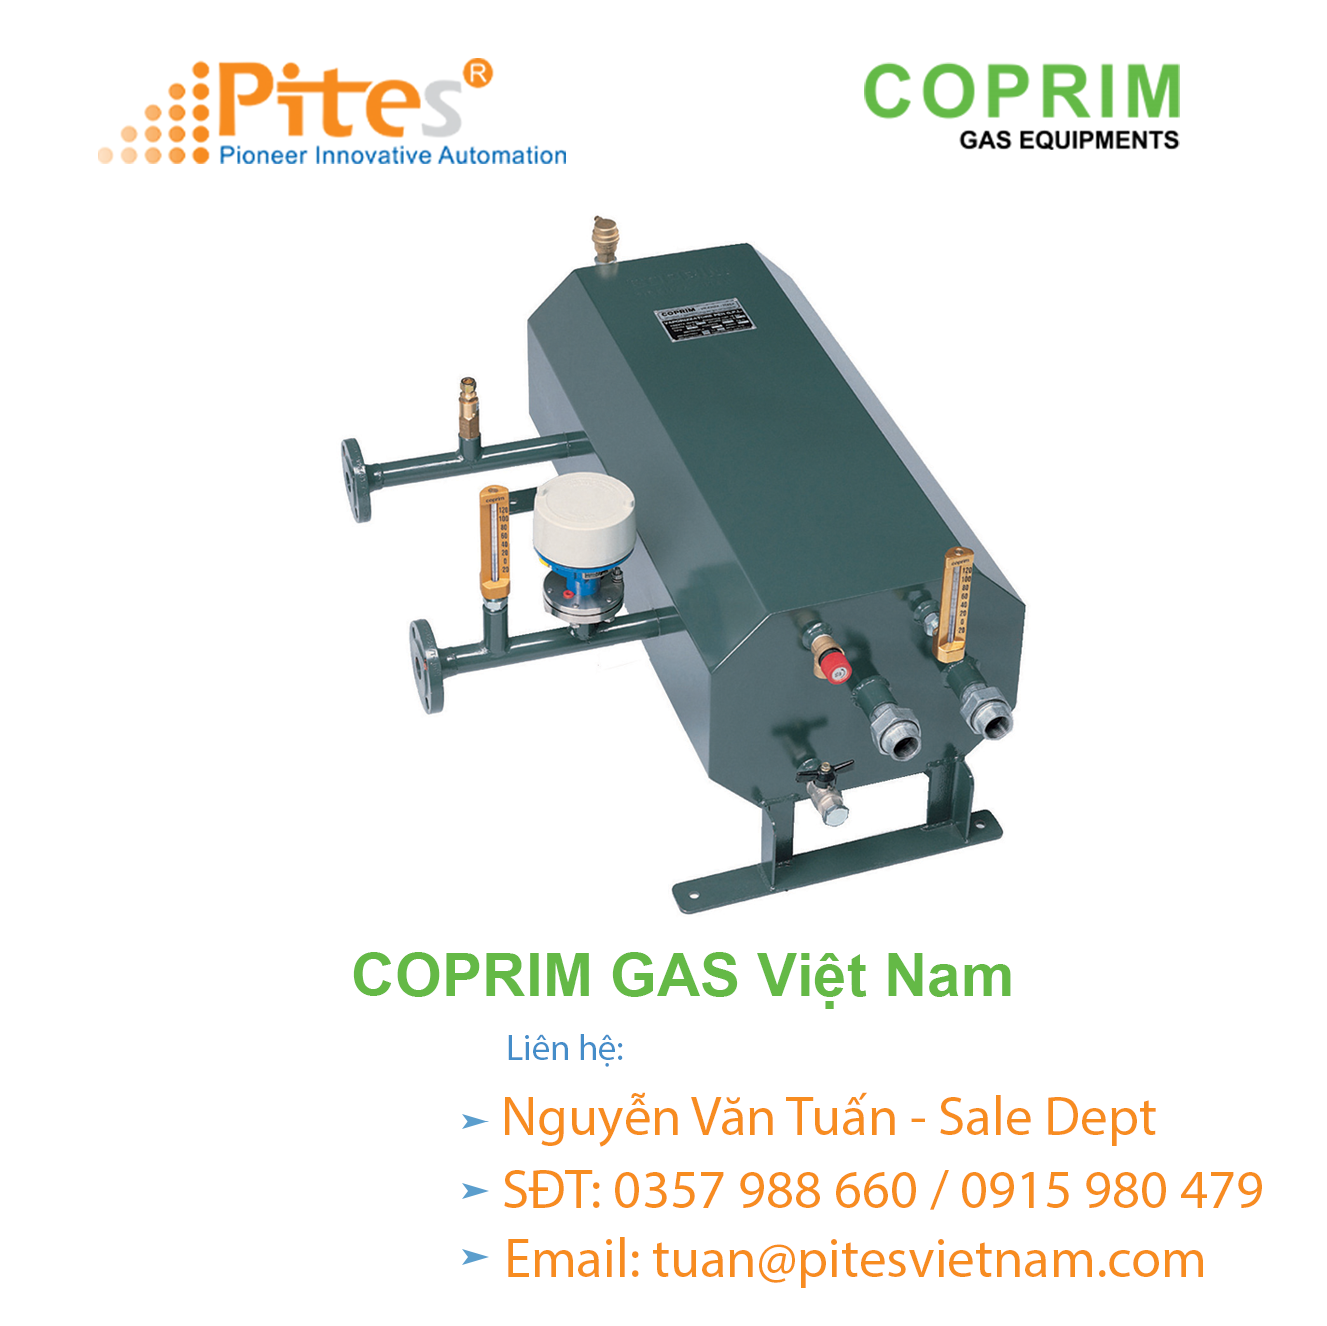 coprim-gas-vietnam-coprim-gas-viet-nam-dai-ly-coprim-gas-list-code-coprim-gas-part-18.png